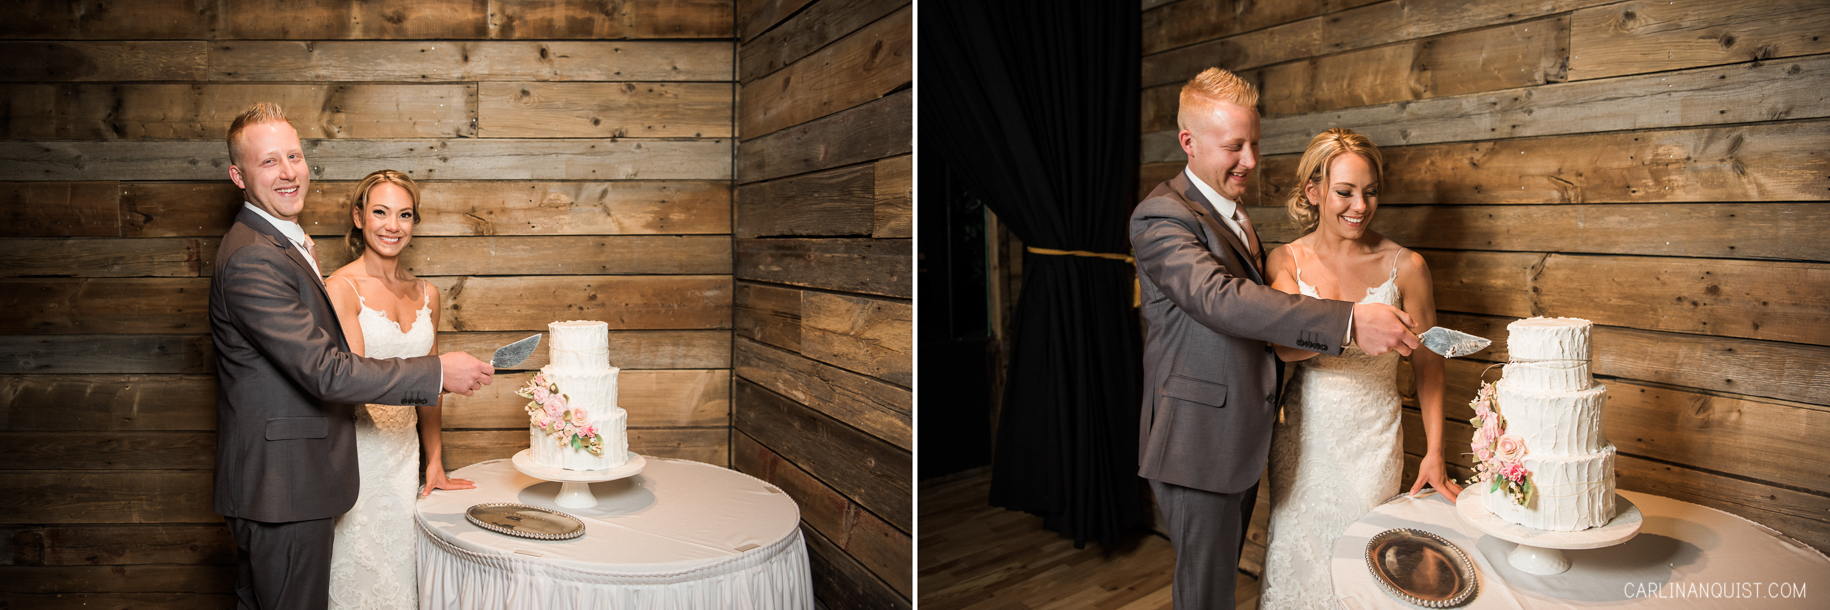 Cake Cutting | Cornerstone Theatre Canmore Wedding Photographer